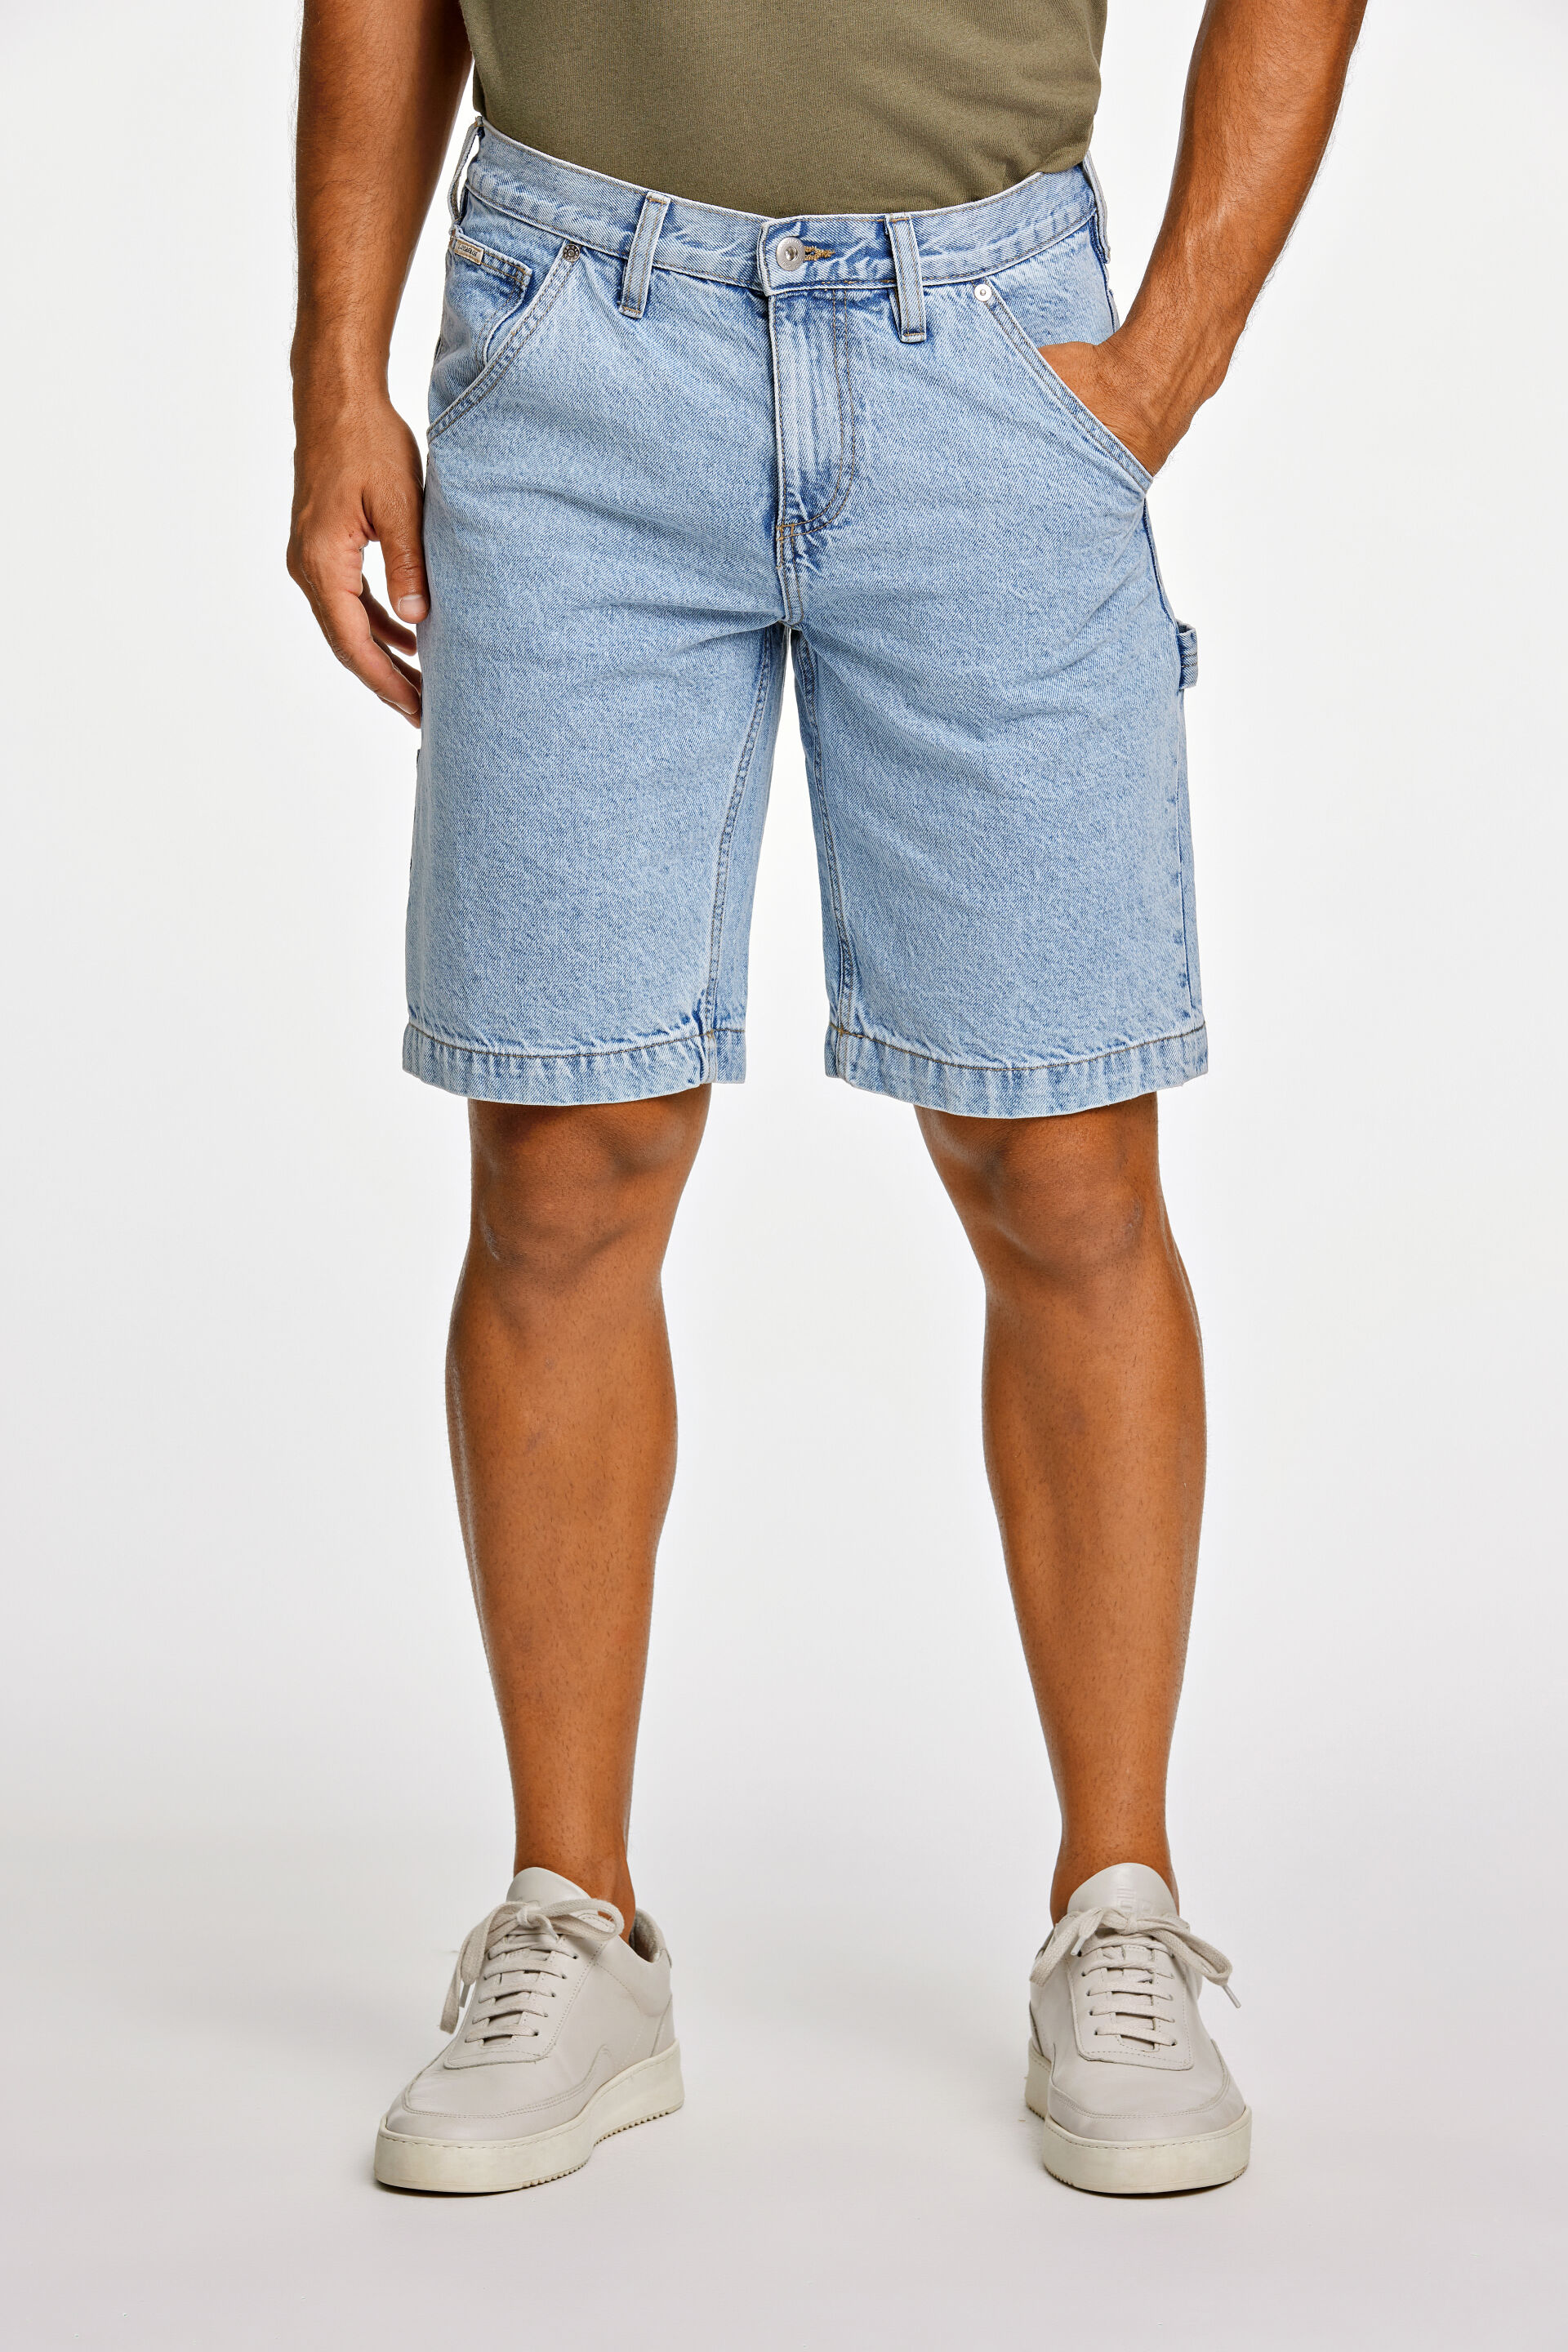 Jeans-Shorts Jeans-Shorts Blau 30-550005BLB